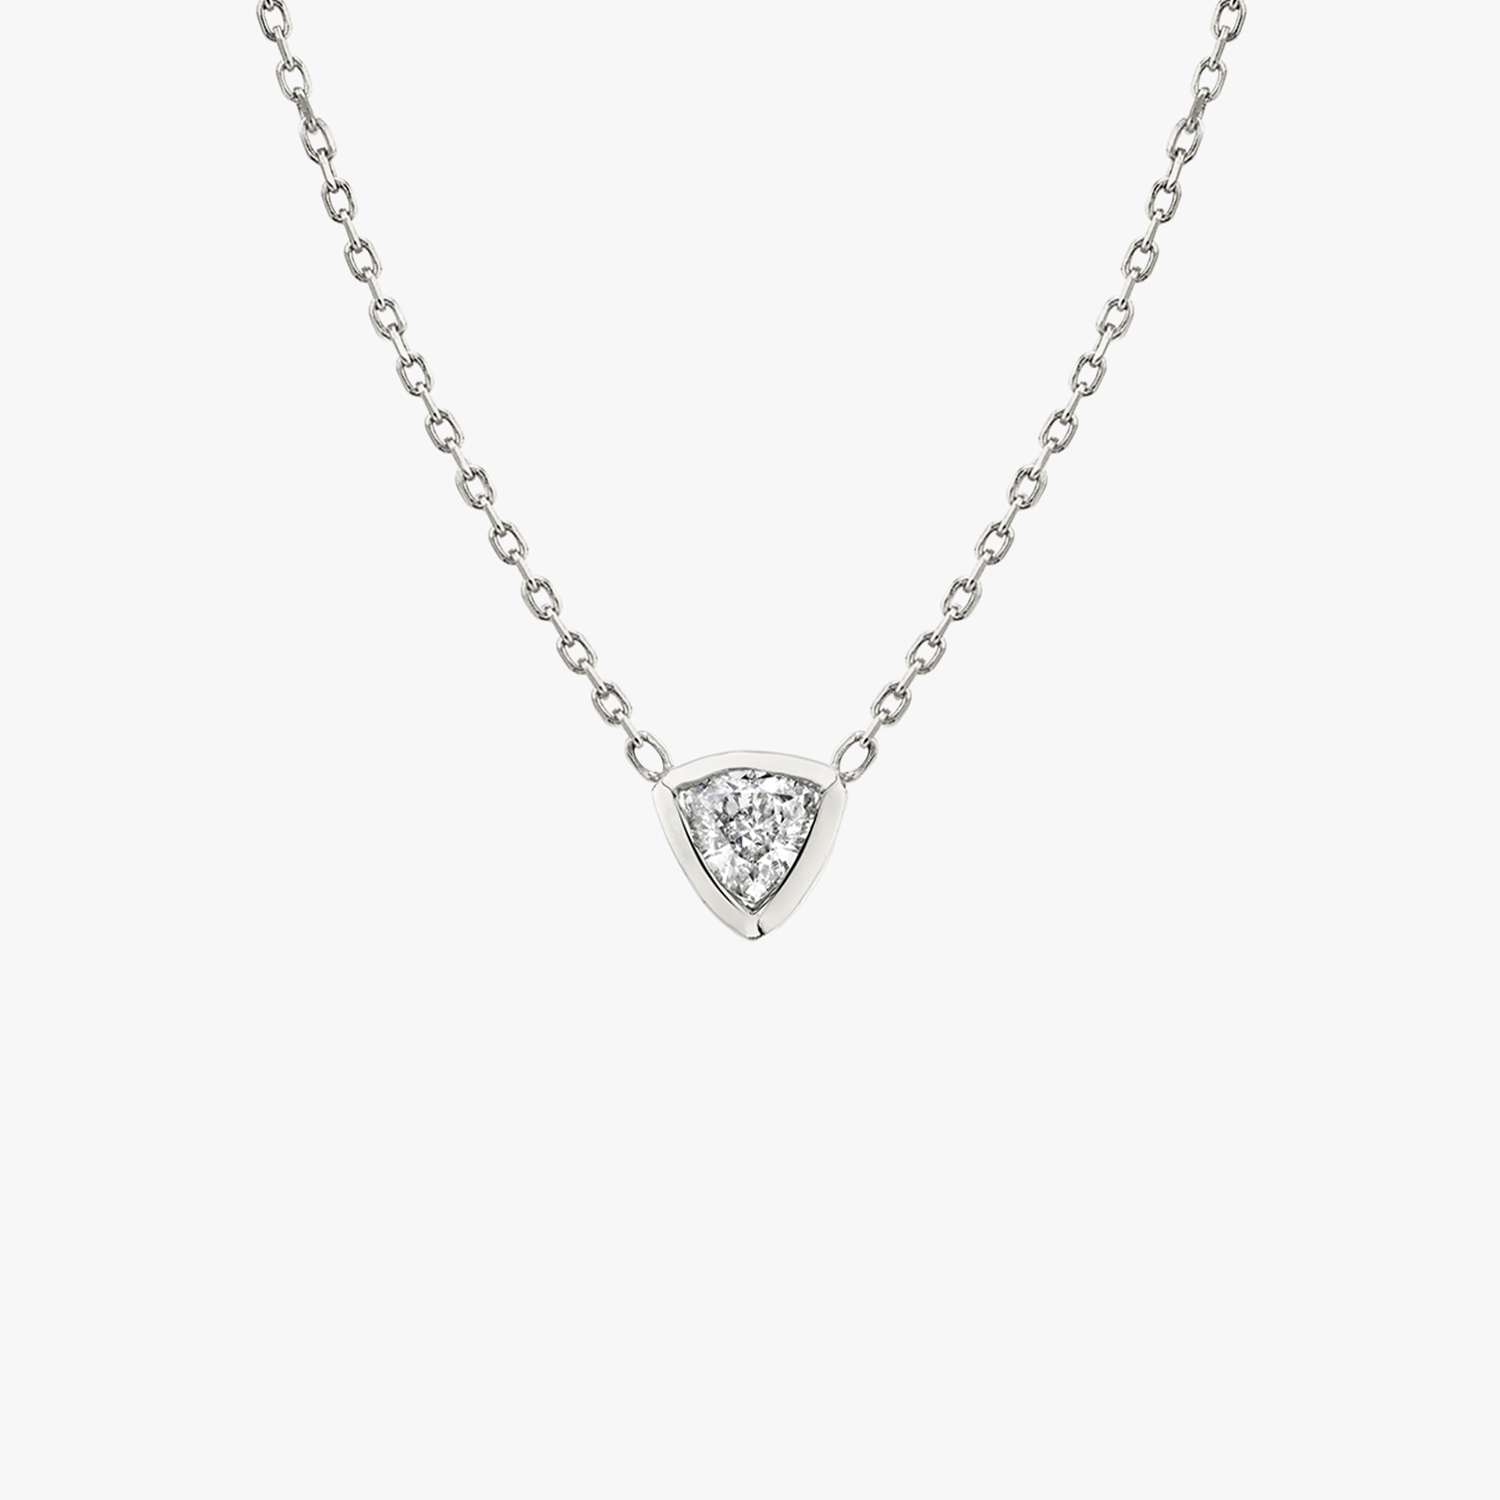 50 Carat Double Bezel-Set Diamond Solitaire Necklace in 14kt White Gold.  18